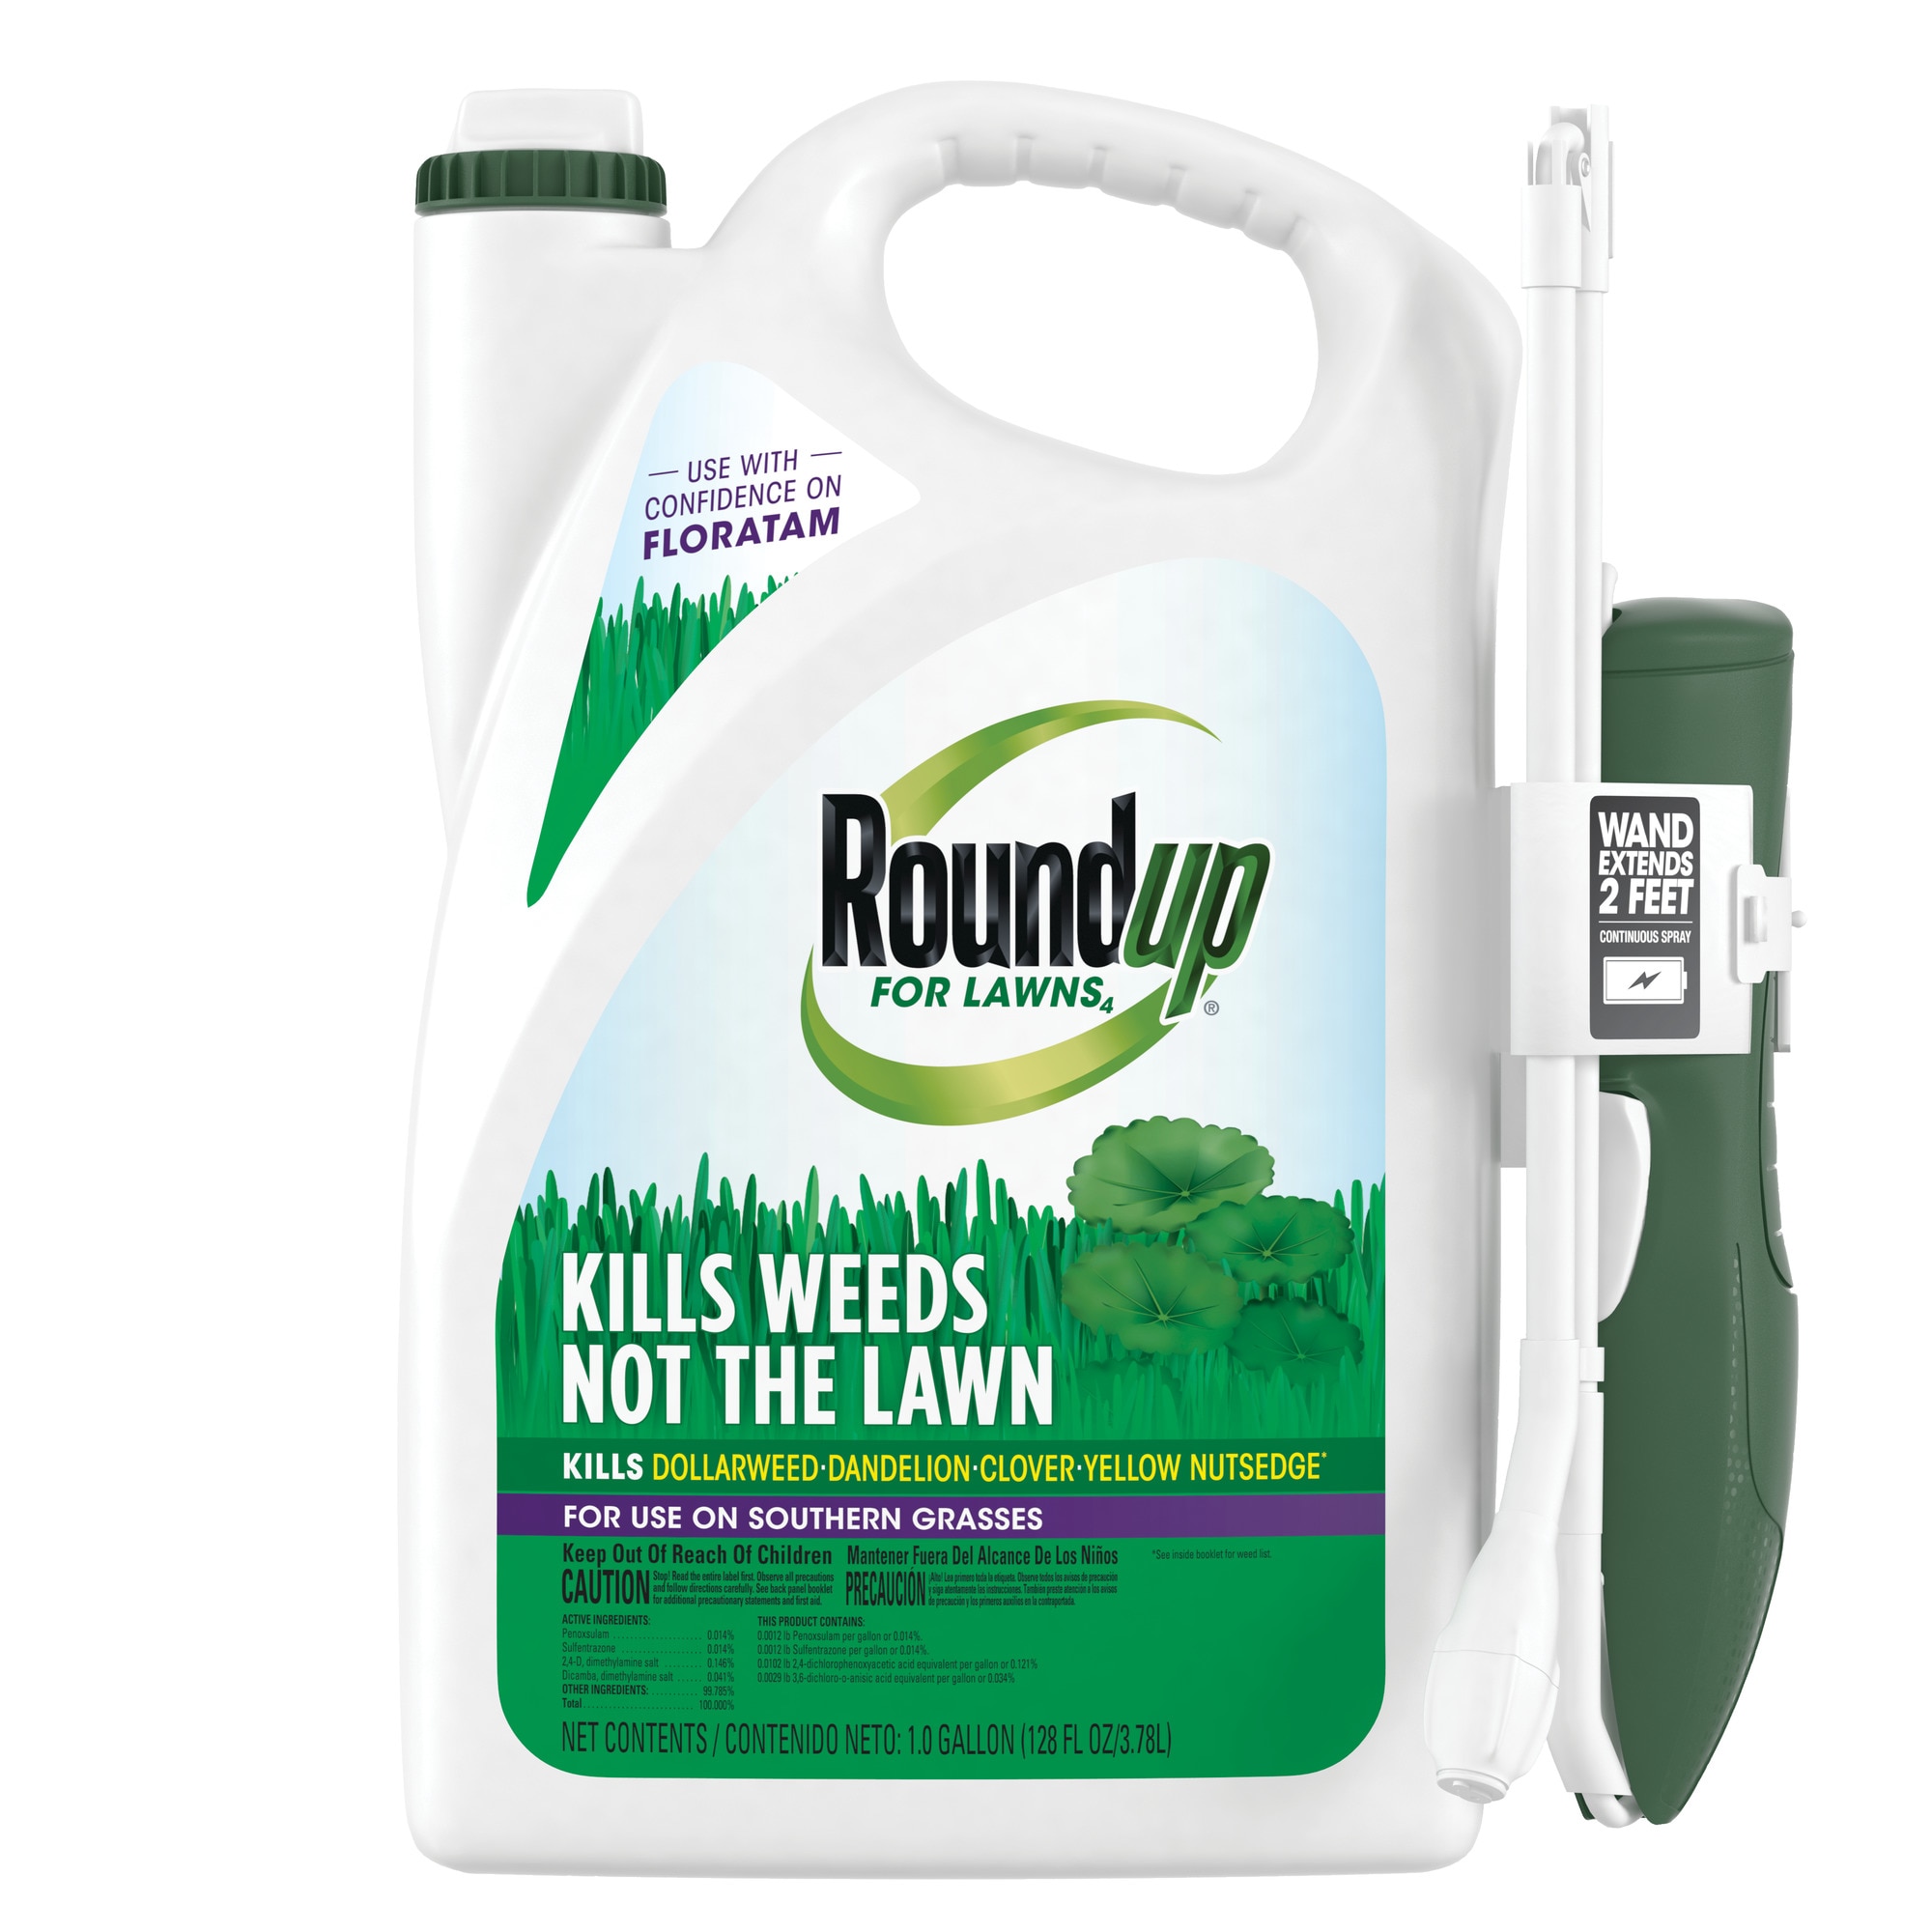 Roundup Weed & Grass Killer Glyphosate Rtu 1.1 Gal 